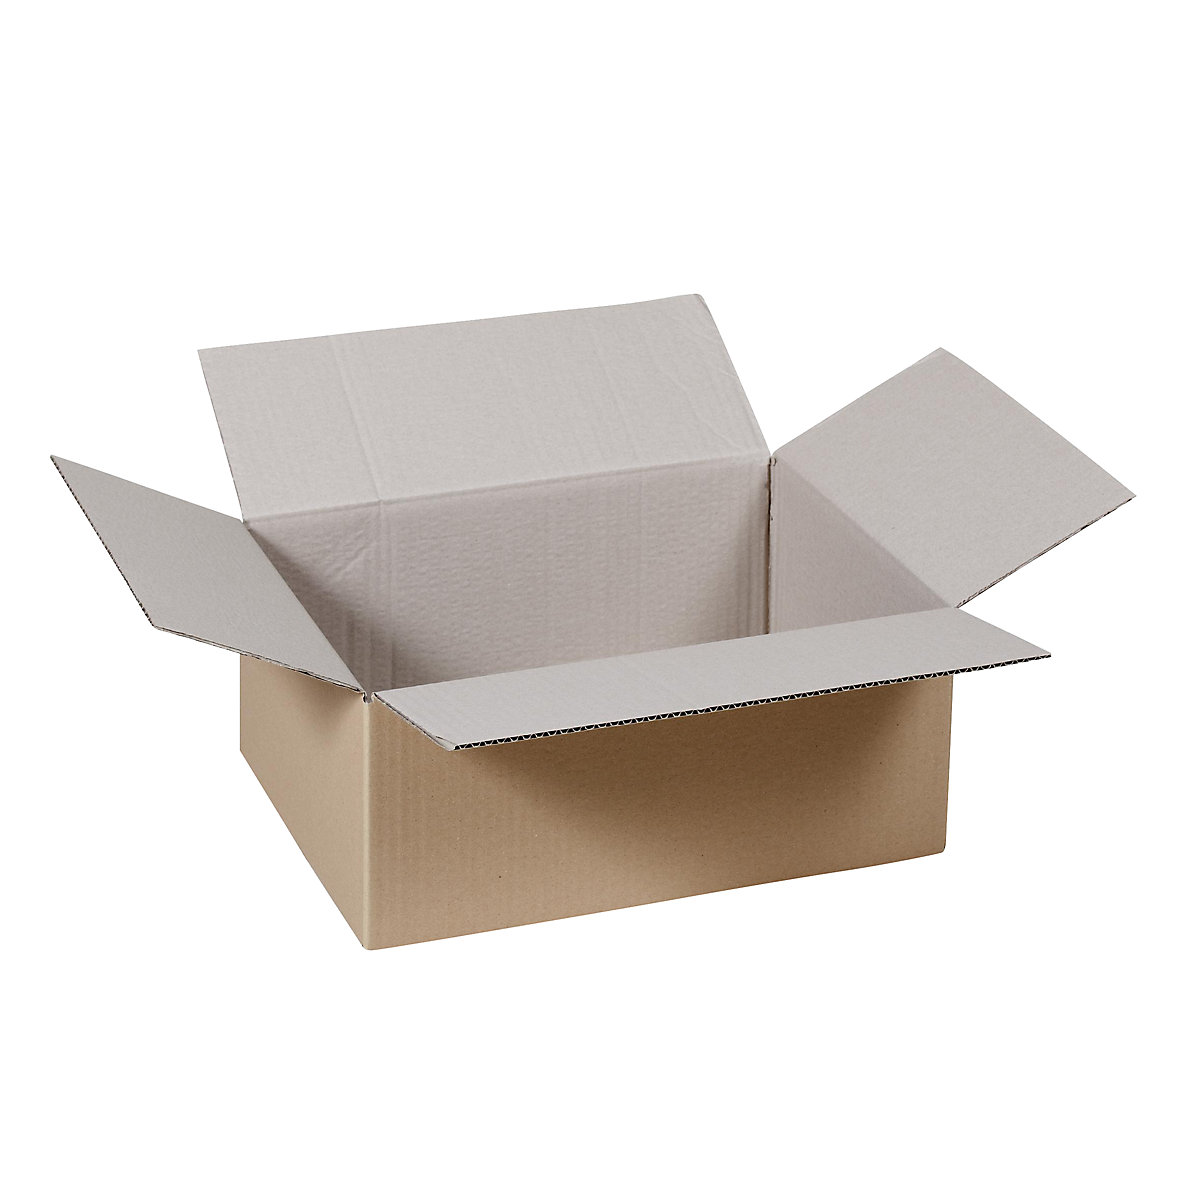 Folding cardboard box, FEFCO 0201, made of single fluted cardboard, internal dimensions 300 x 200 x 170 mm, pack of 50-27